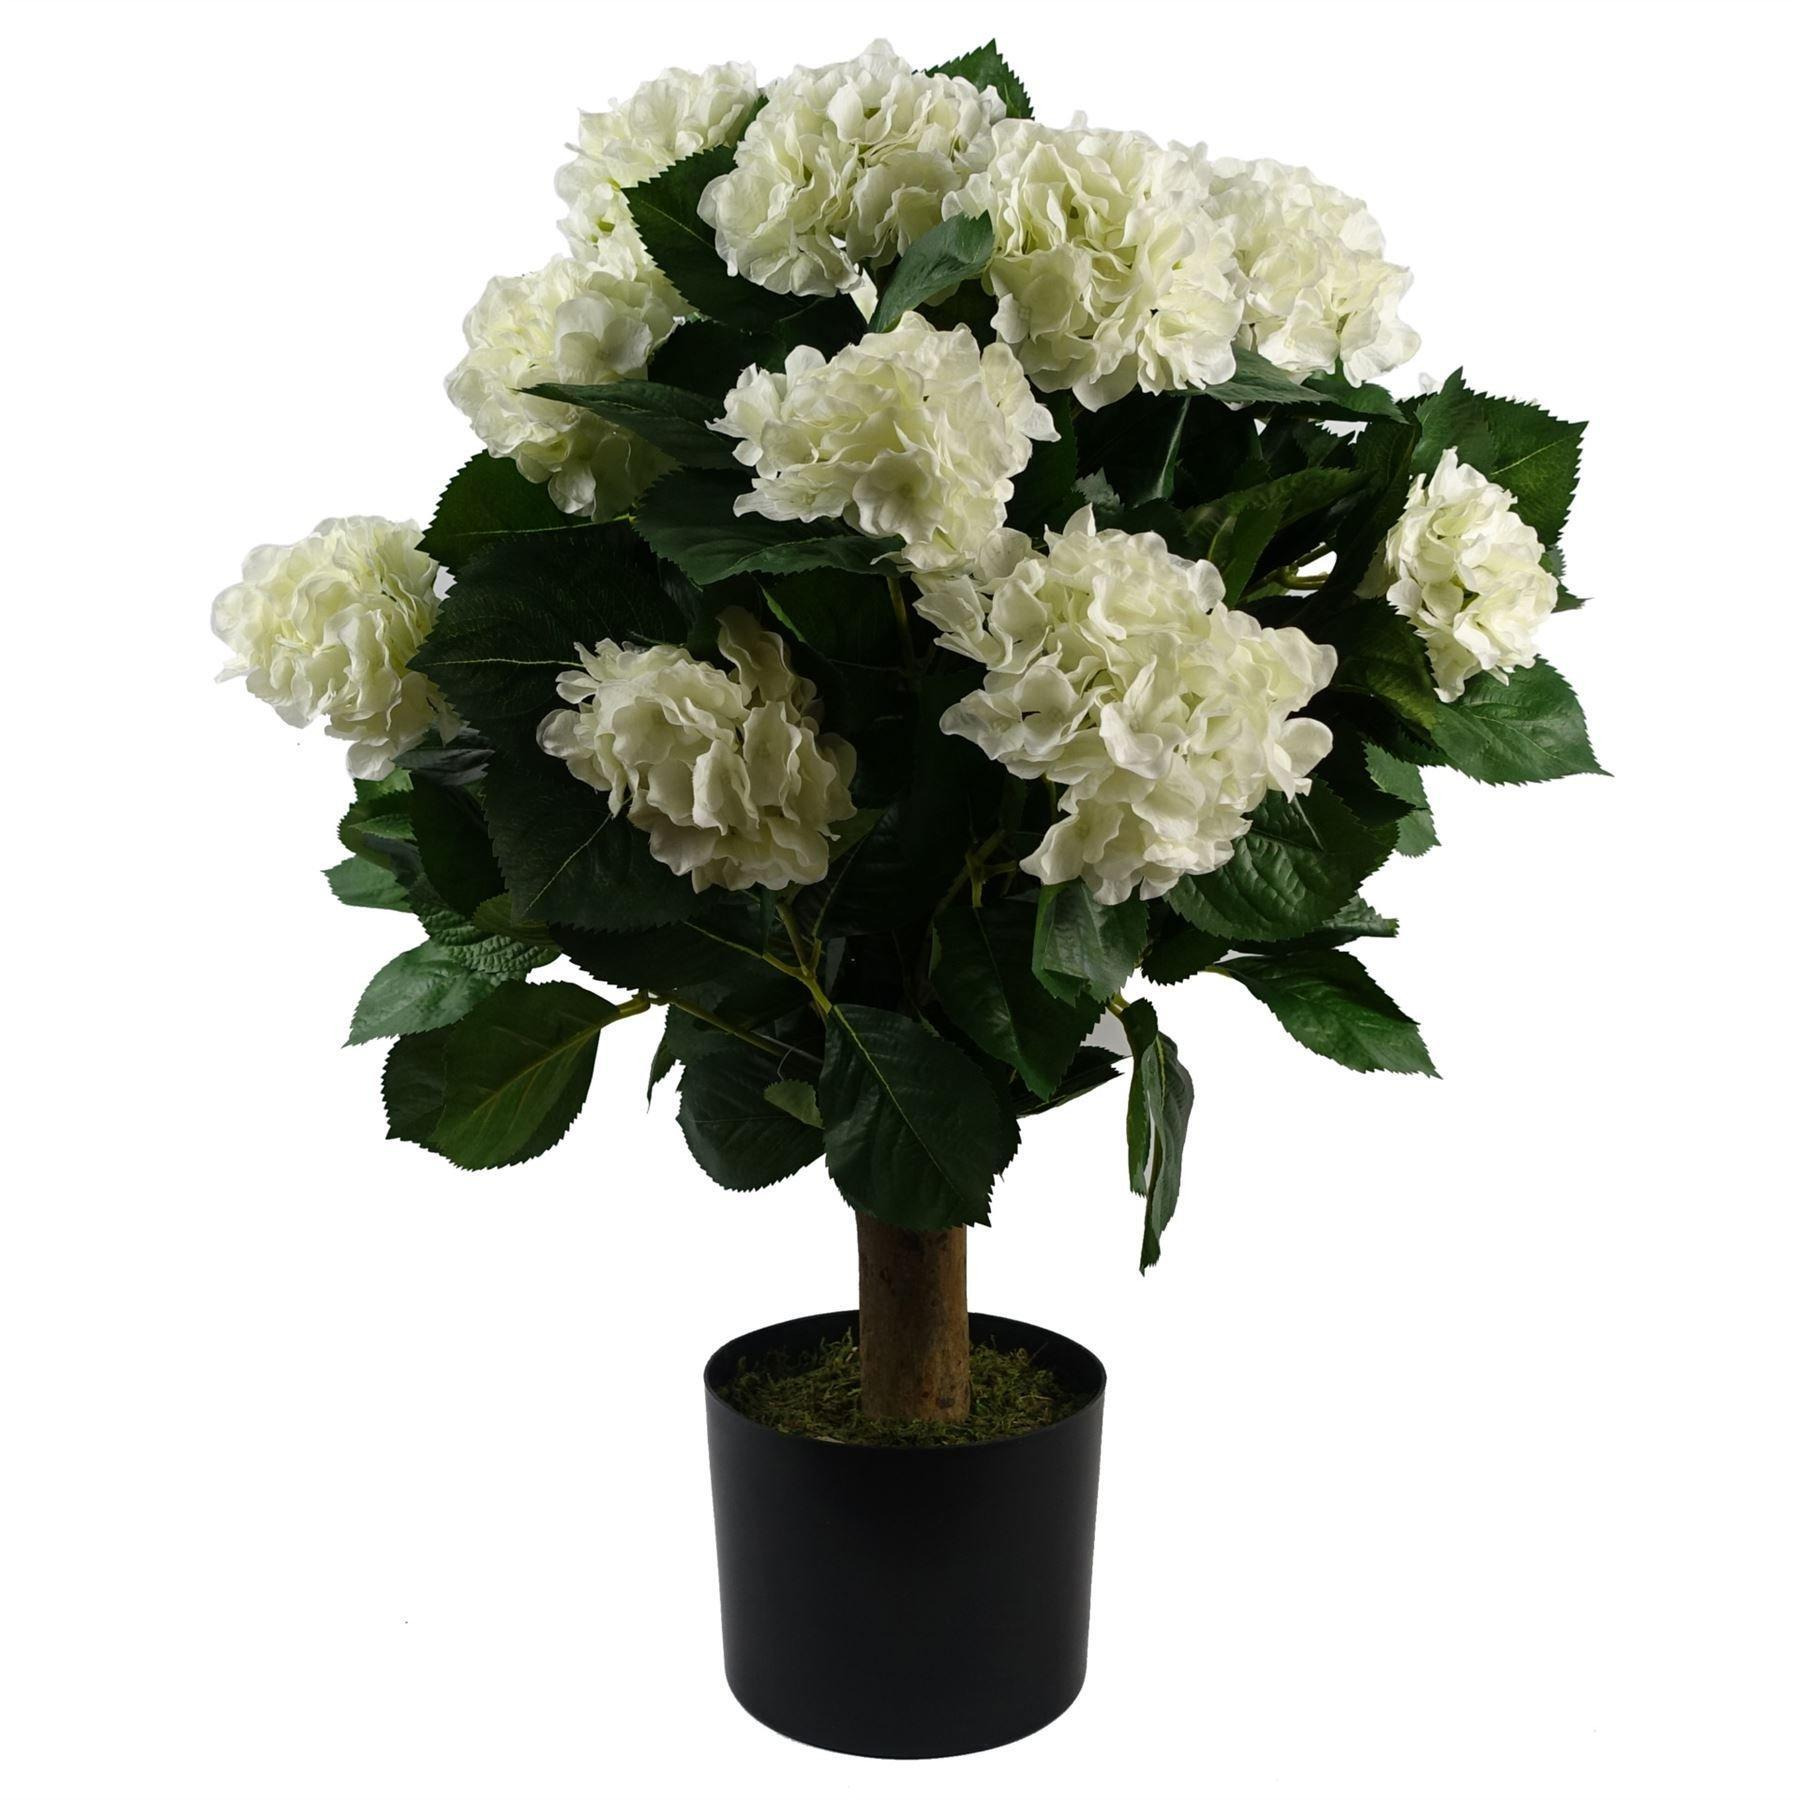 70cm Artificial White Bush Hydrangea Plant Potted - image 1